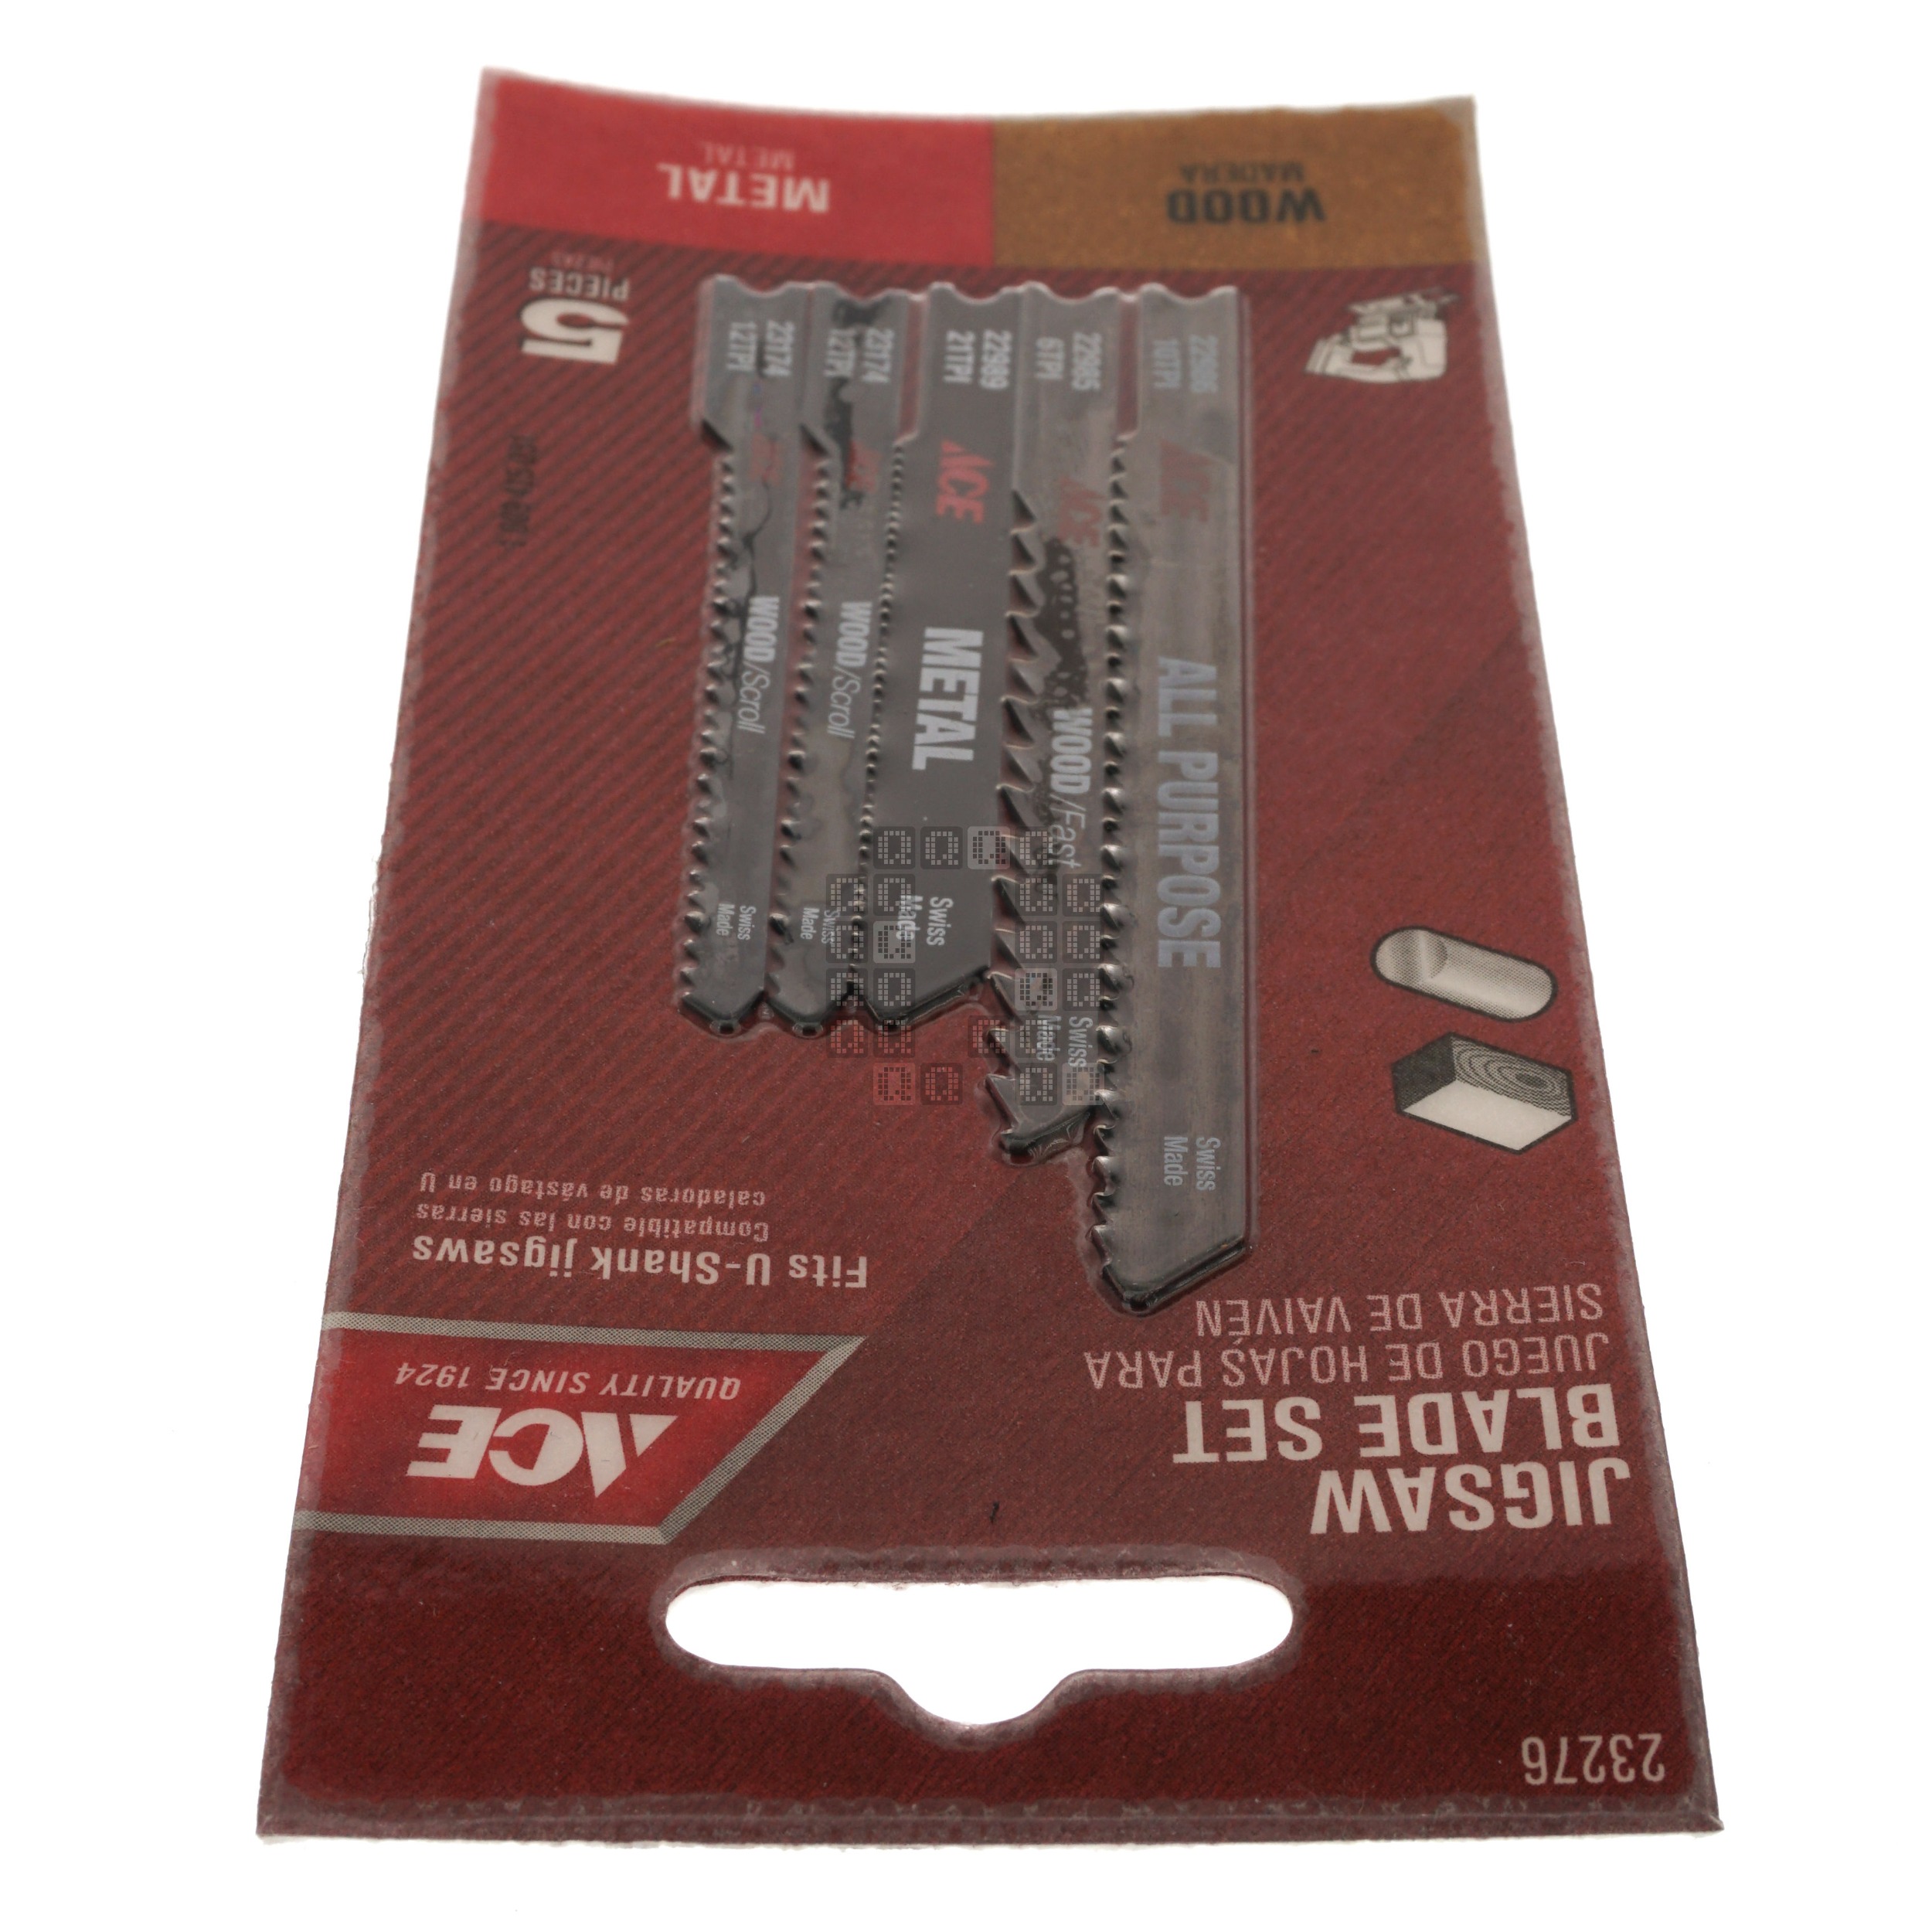 Irwin Jigsaw Blades Wood Cutting Pack of 5 U101D 10504291